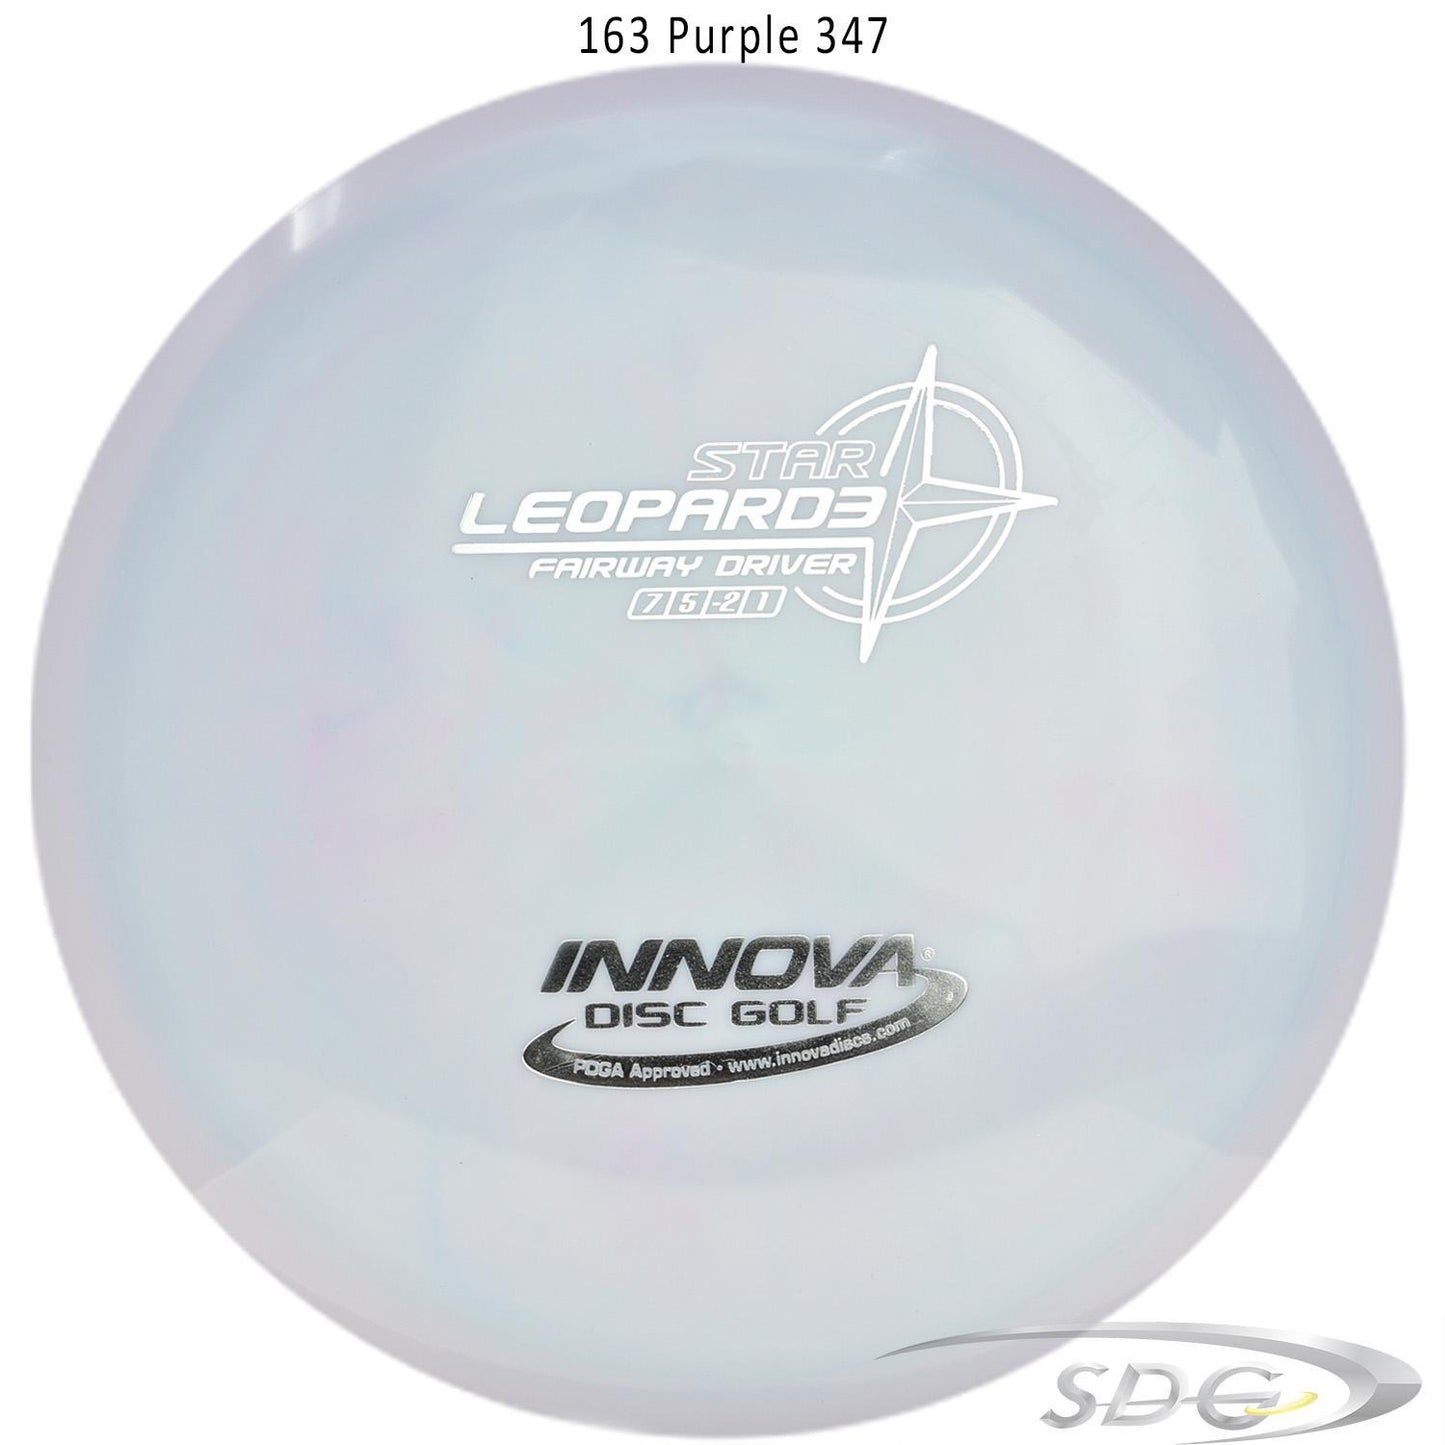 innova-star-leopard3-disc-golf-fairway-driver 163 Purple 347 